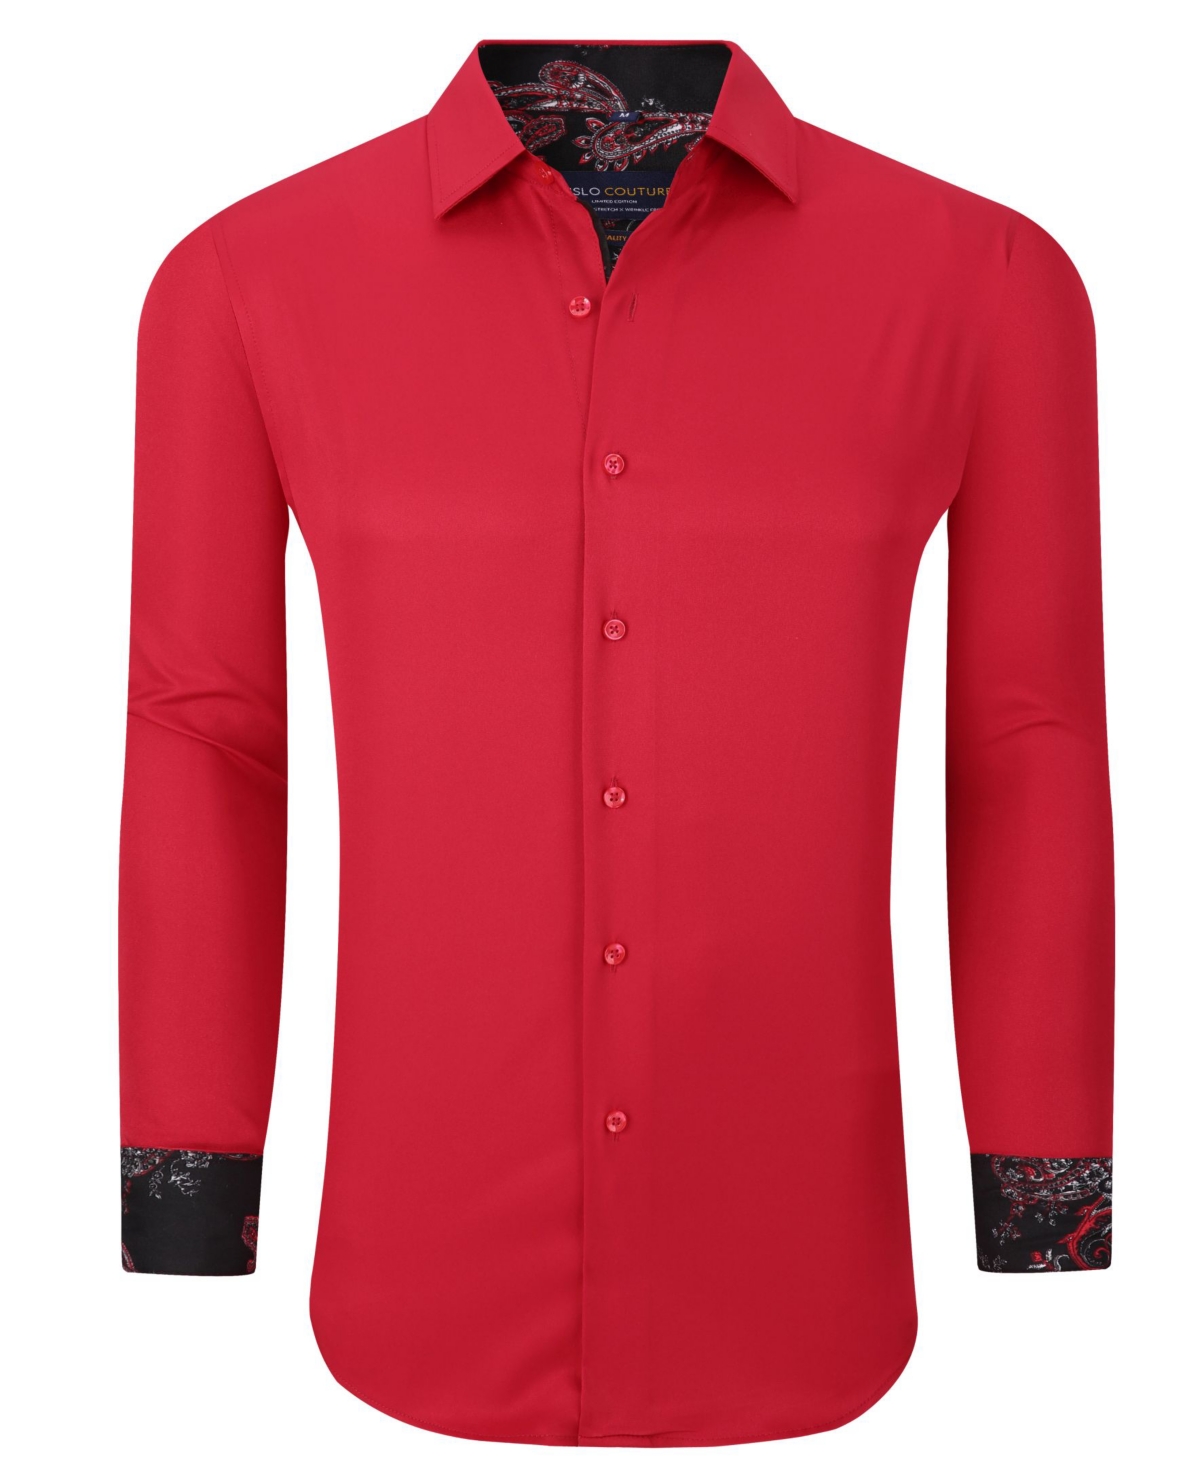 Men's Solid Slim Fit Wrinkle Free Stretch Dress Shirt - Red